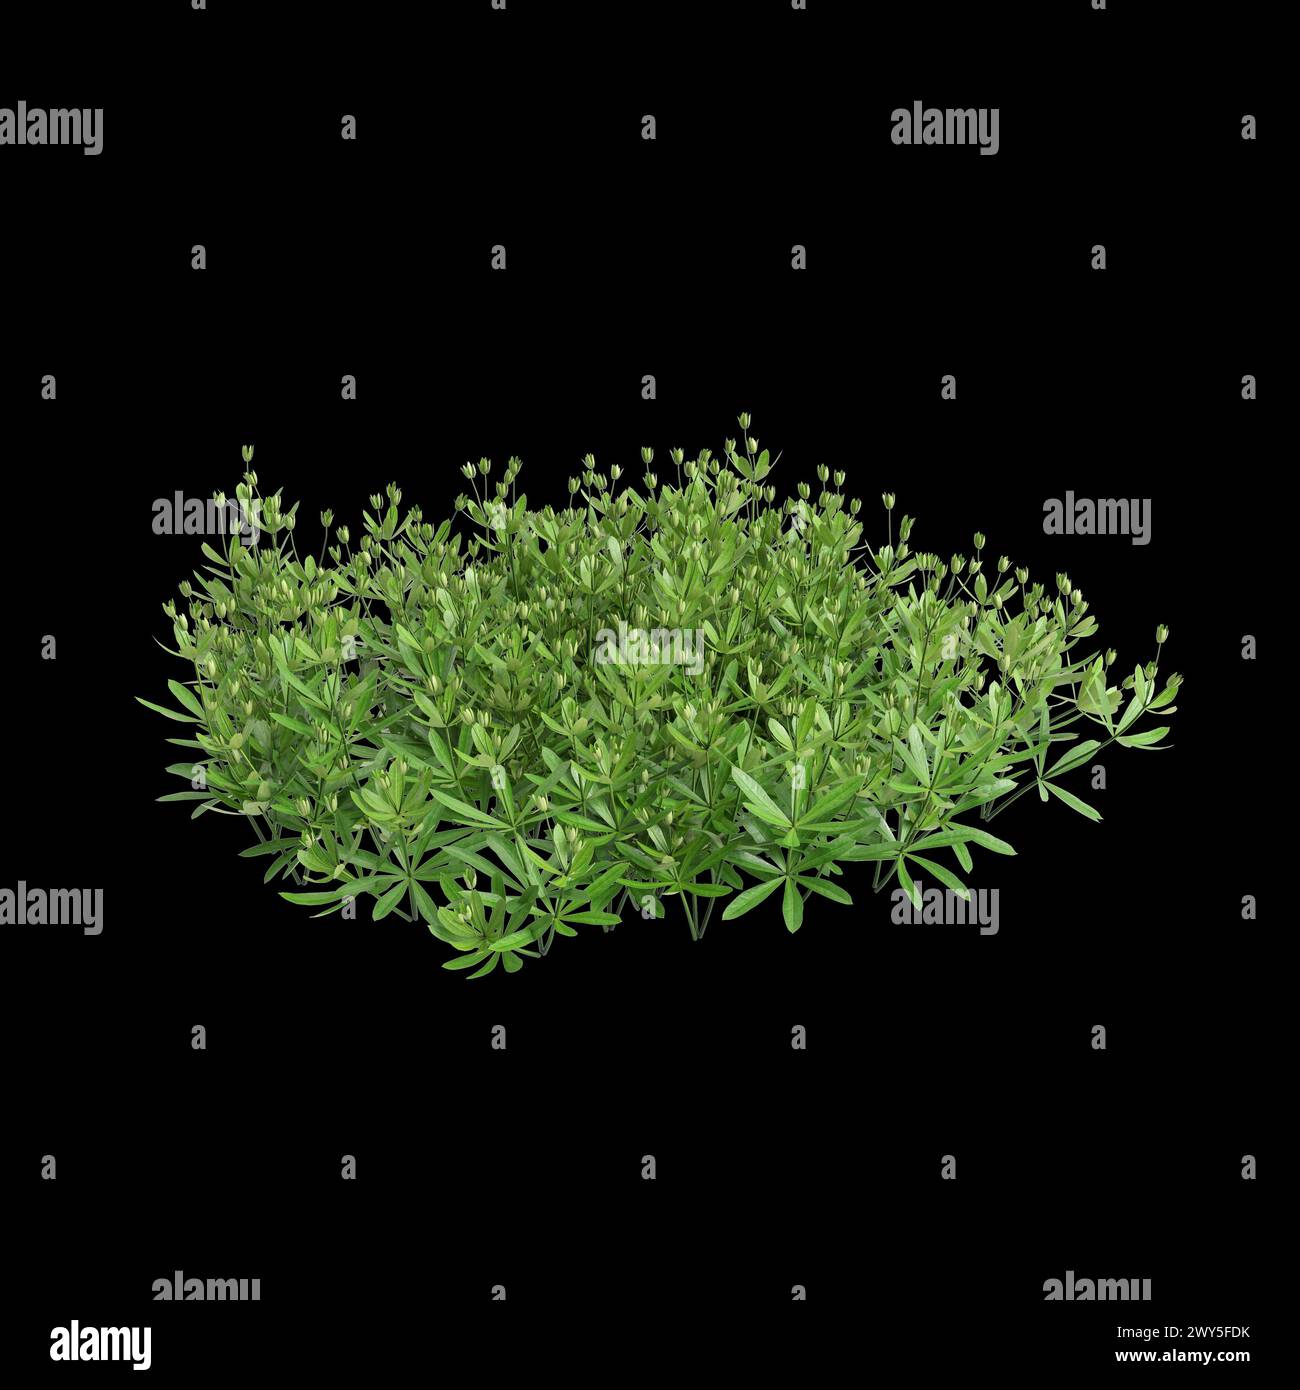 3d illustration of Galium odoratum bush isolated on black background Stock Photo